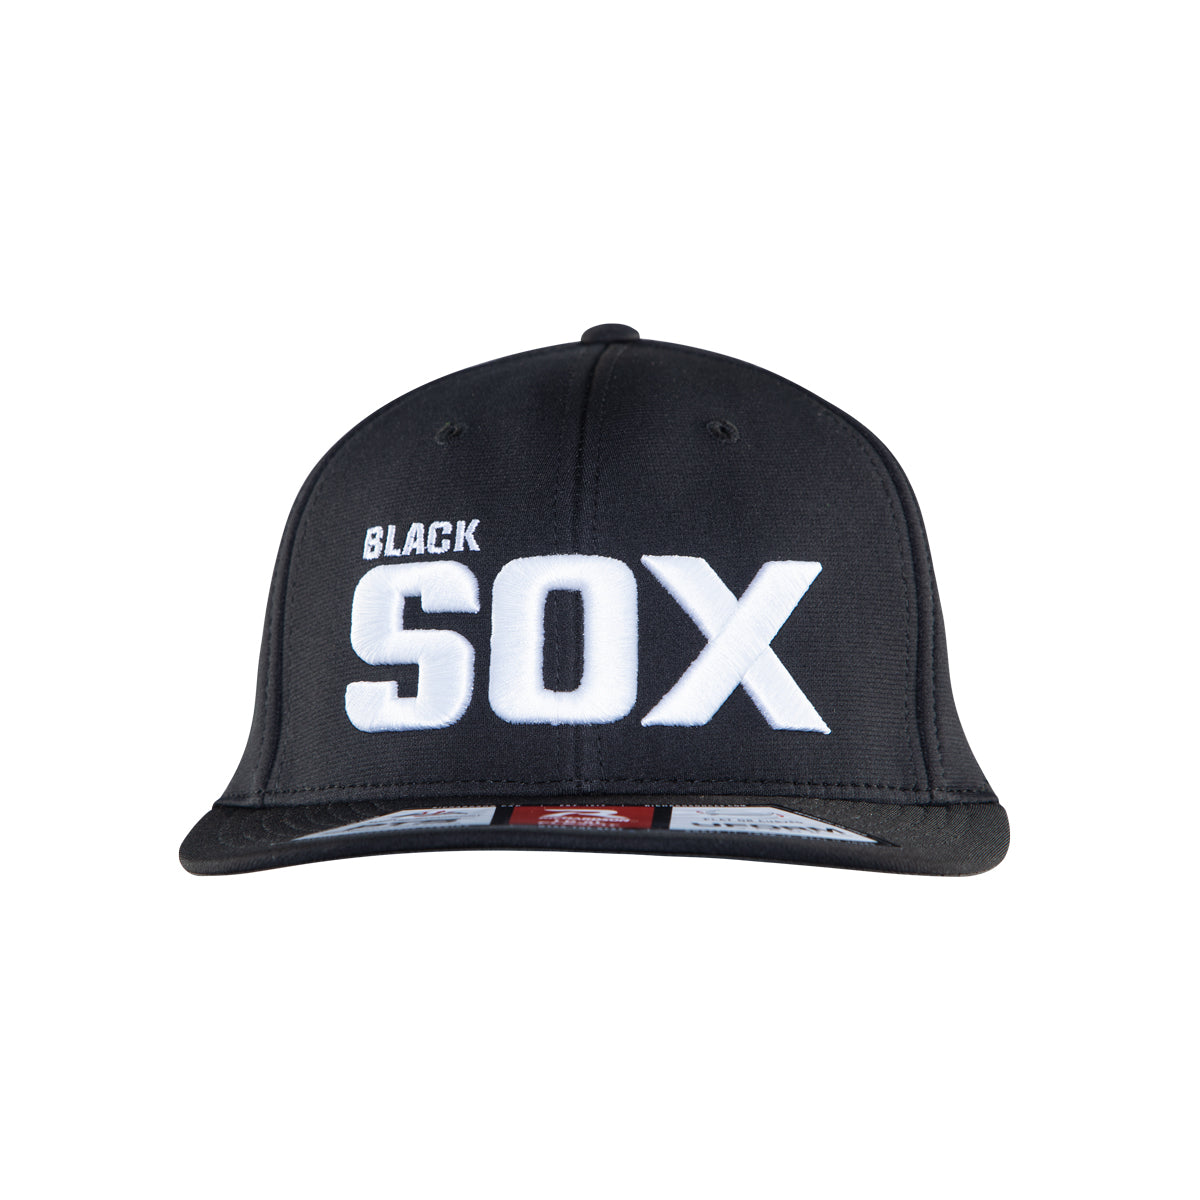 Black Sox Black Hat